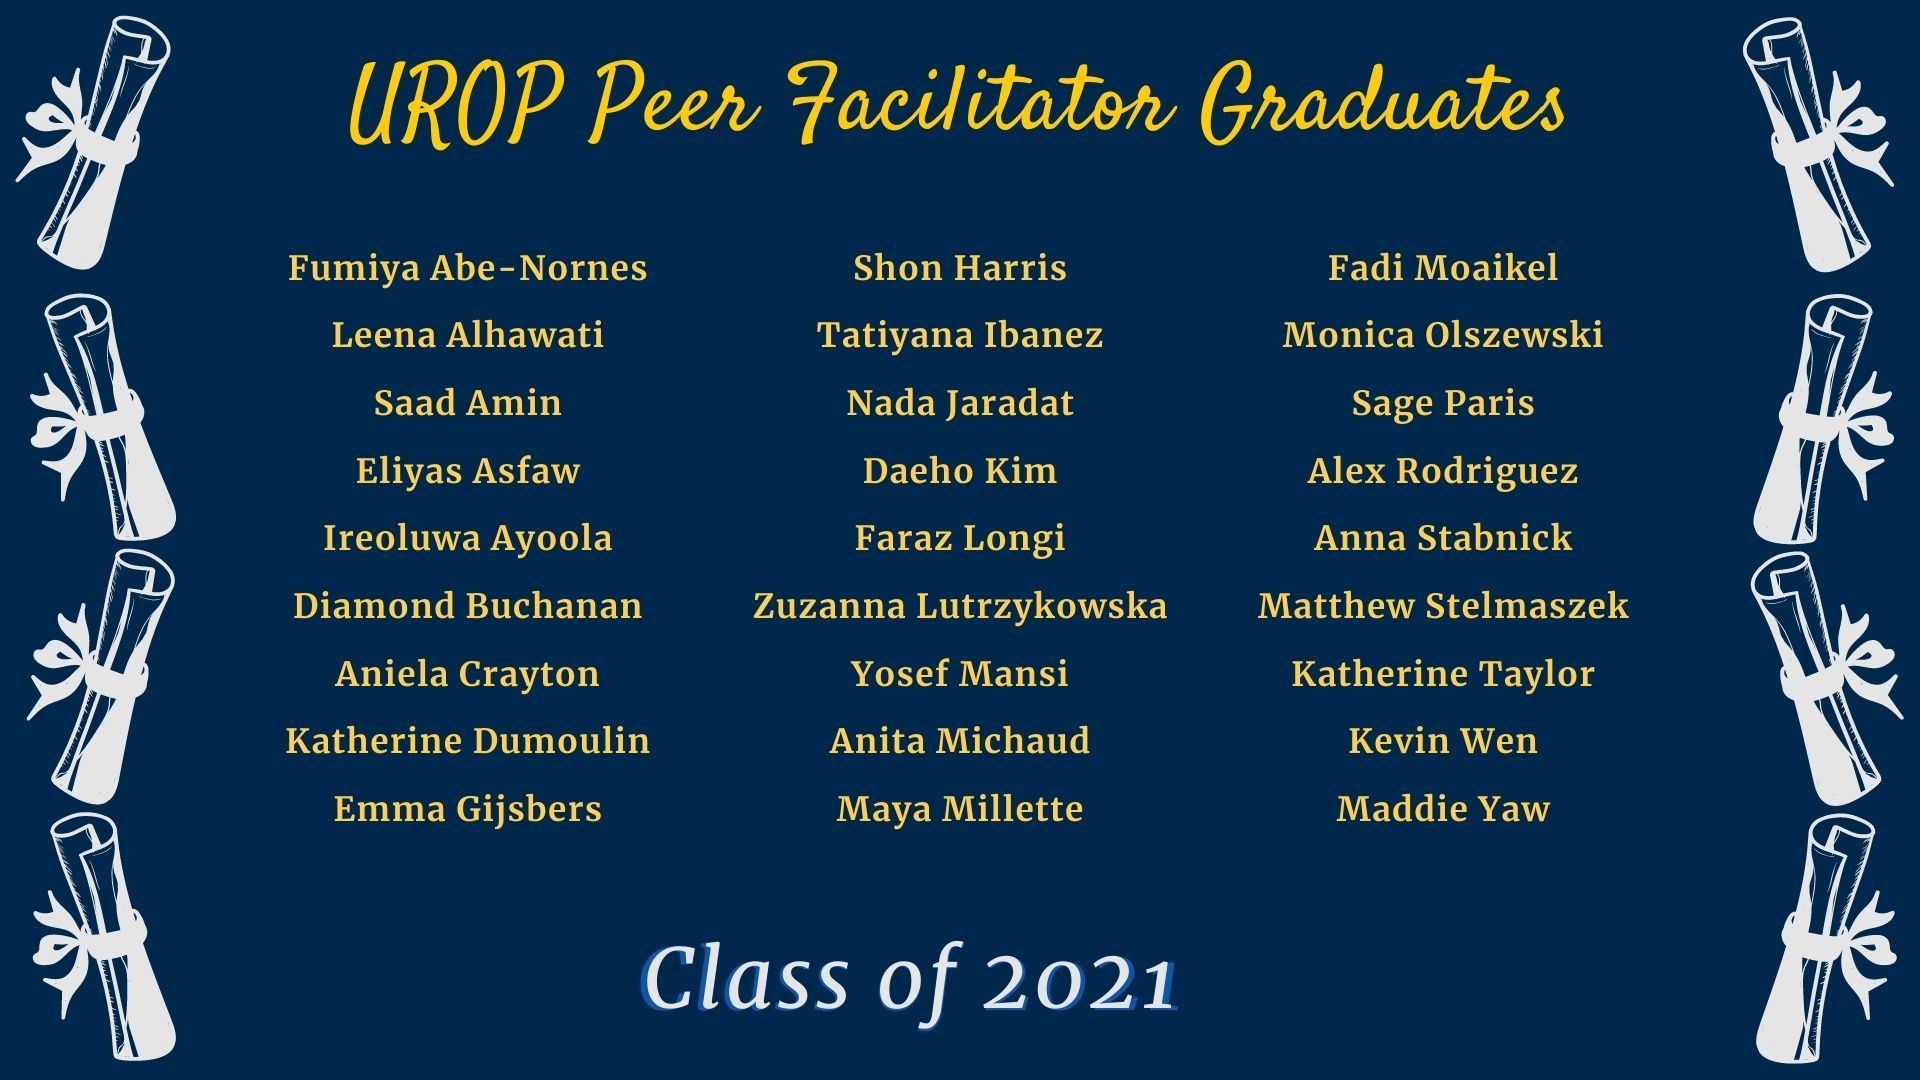 Full list of Peer Facilitators graduating with the class of 2021